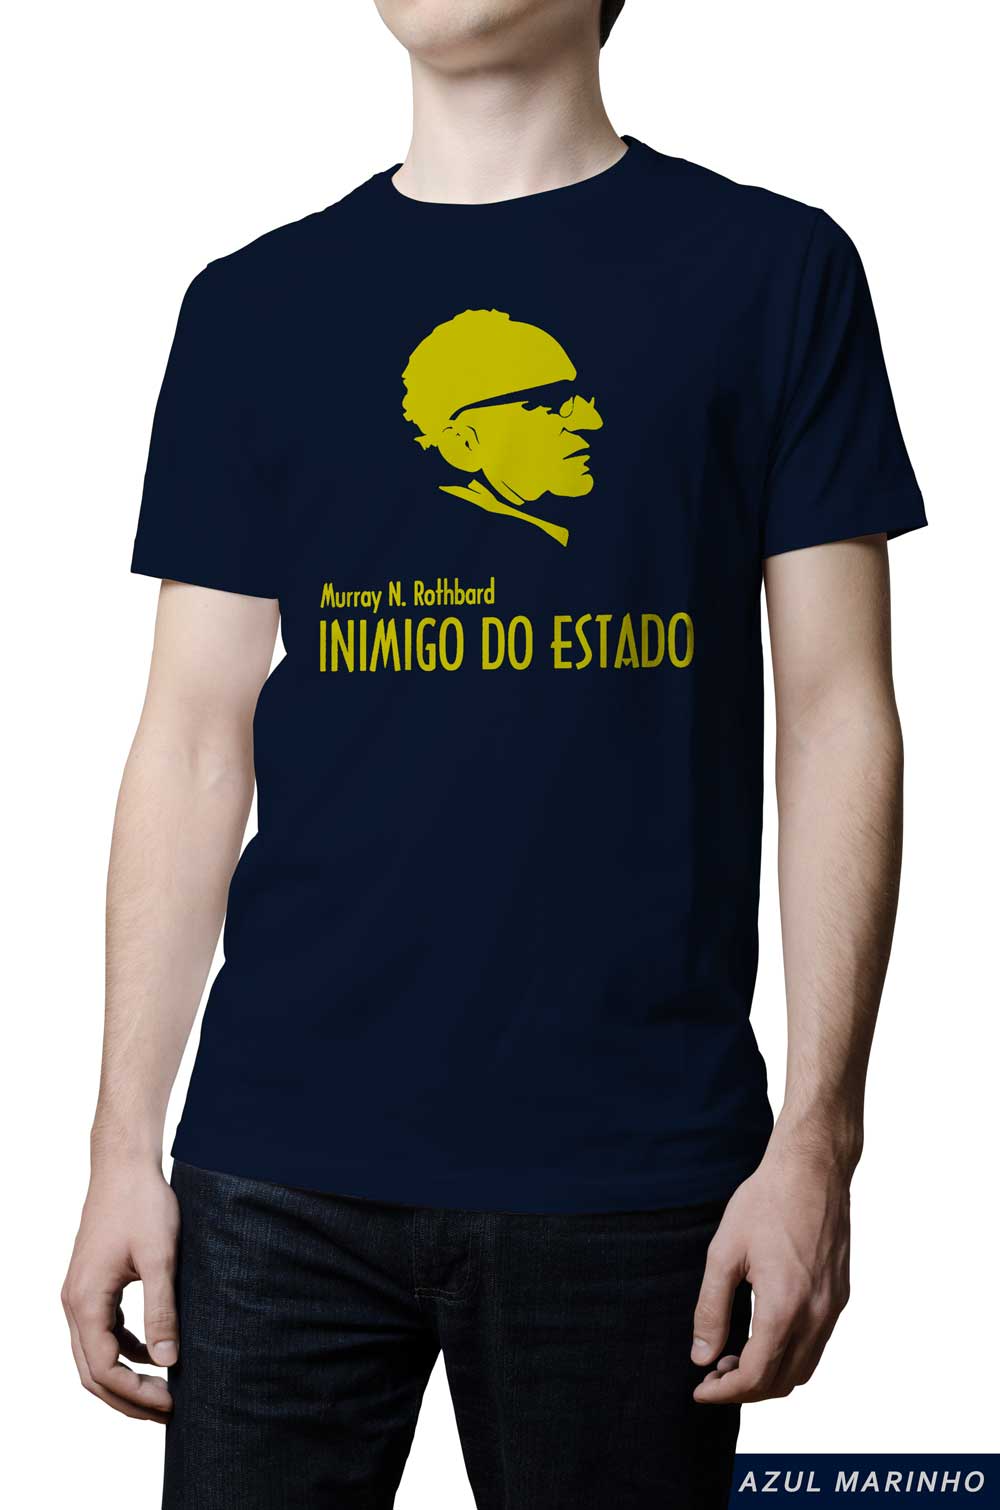 Camiseta - Rothbard - Inimigo do Estado